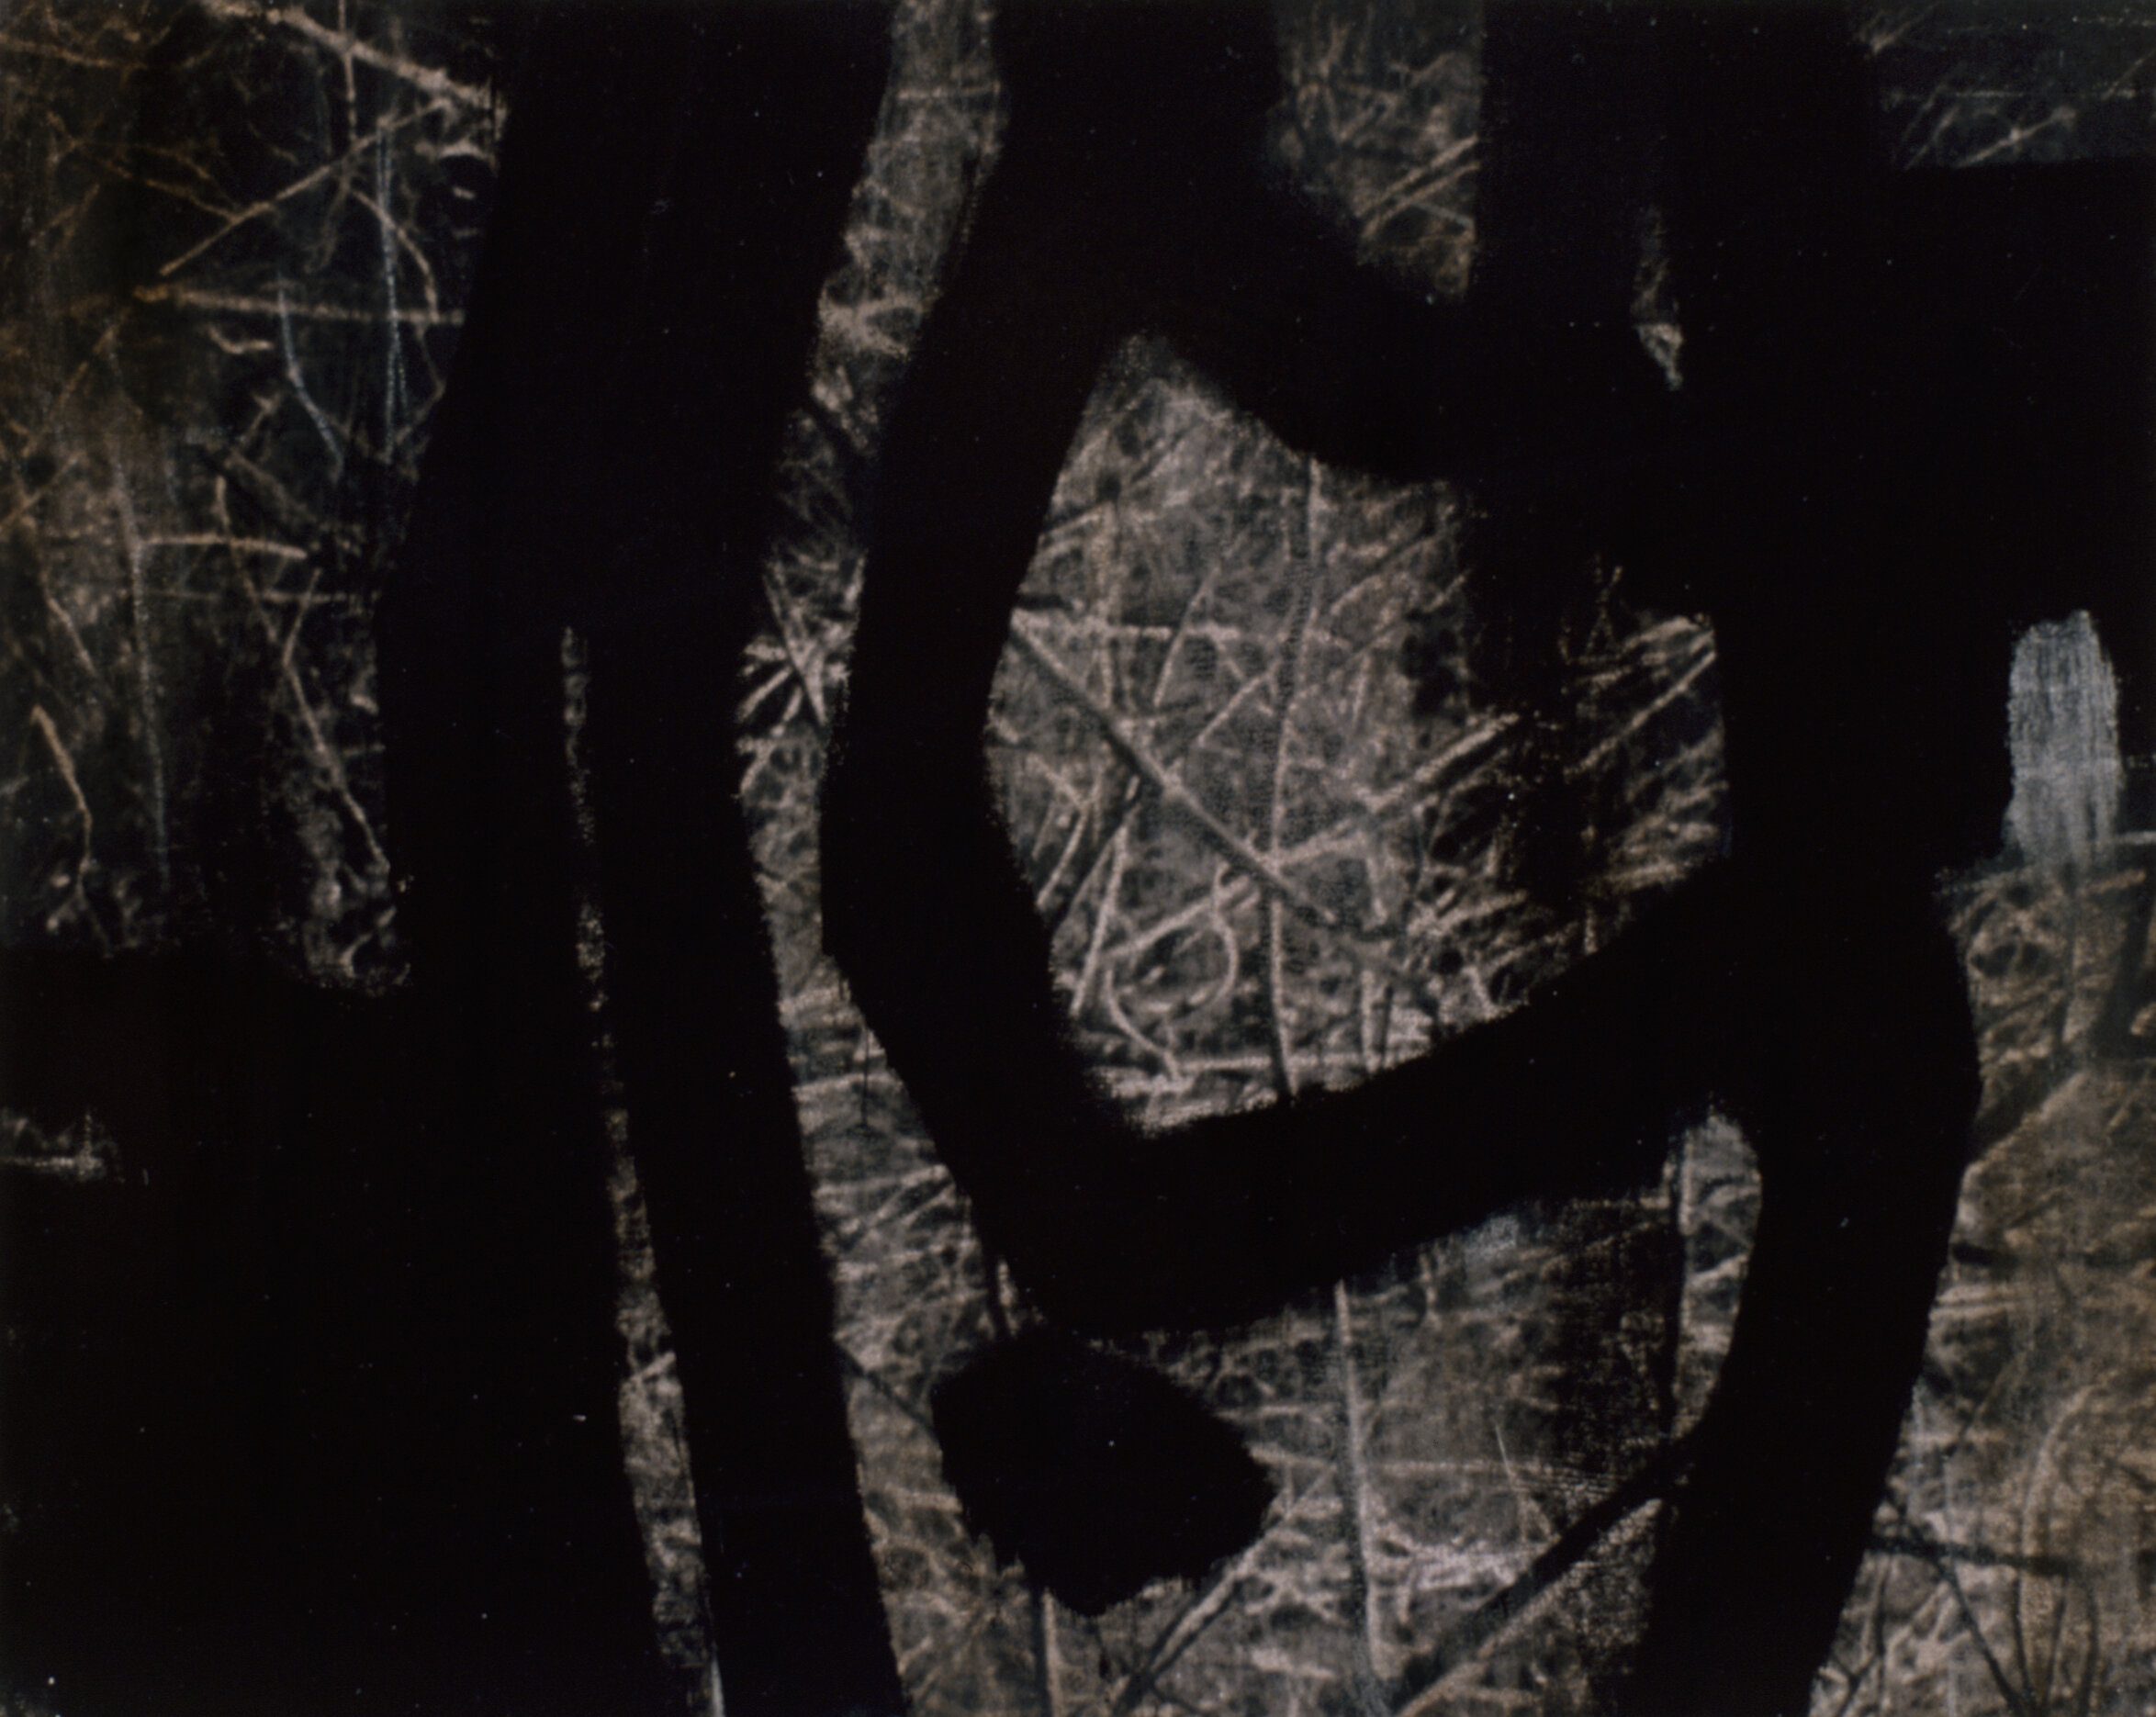   Untitled 18.P3       2002  Digital Image , Oil, Paper on Panel      8” x 10”   